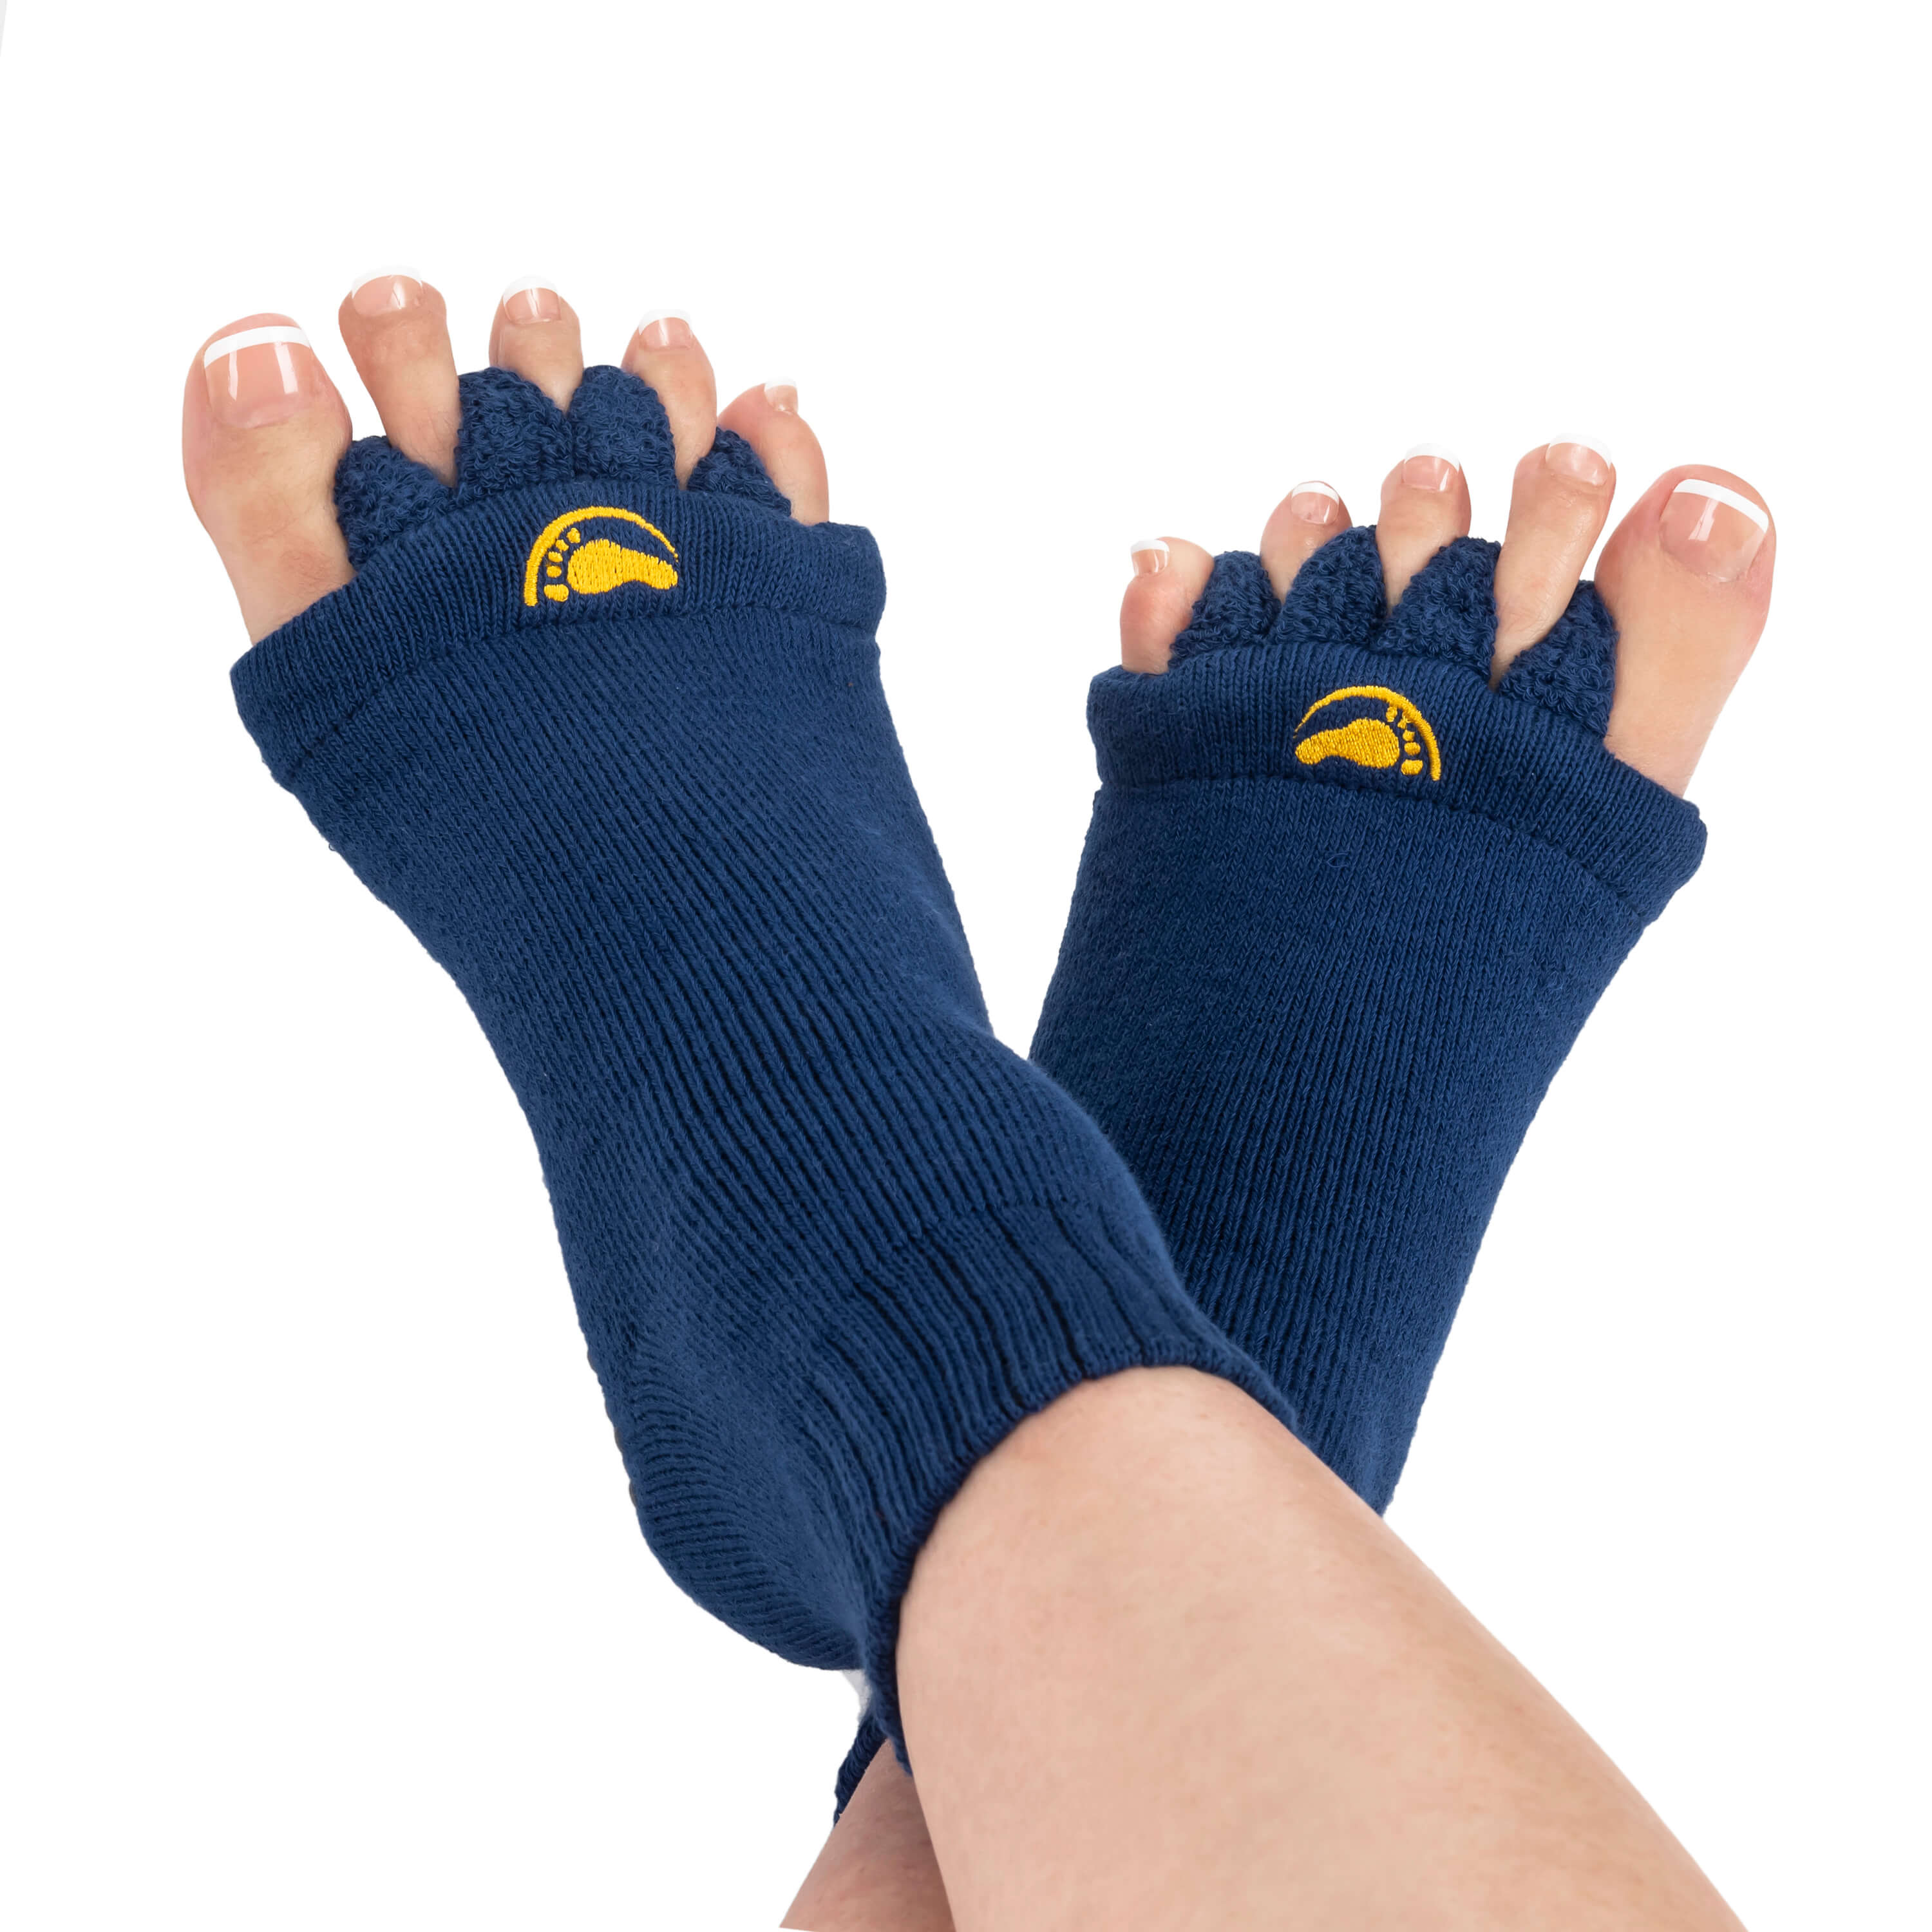 Toe alignment socks help eliminate foot pain – My-Happy Feet - The